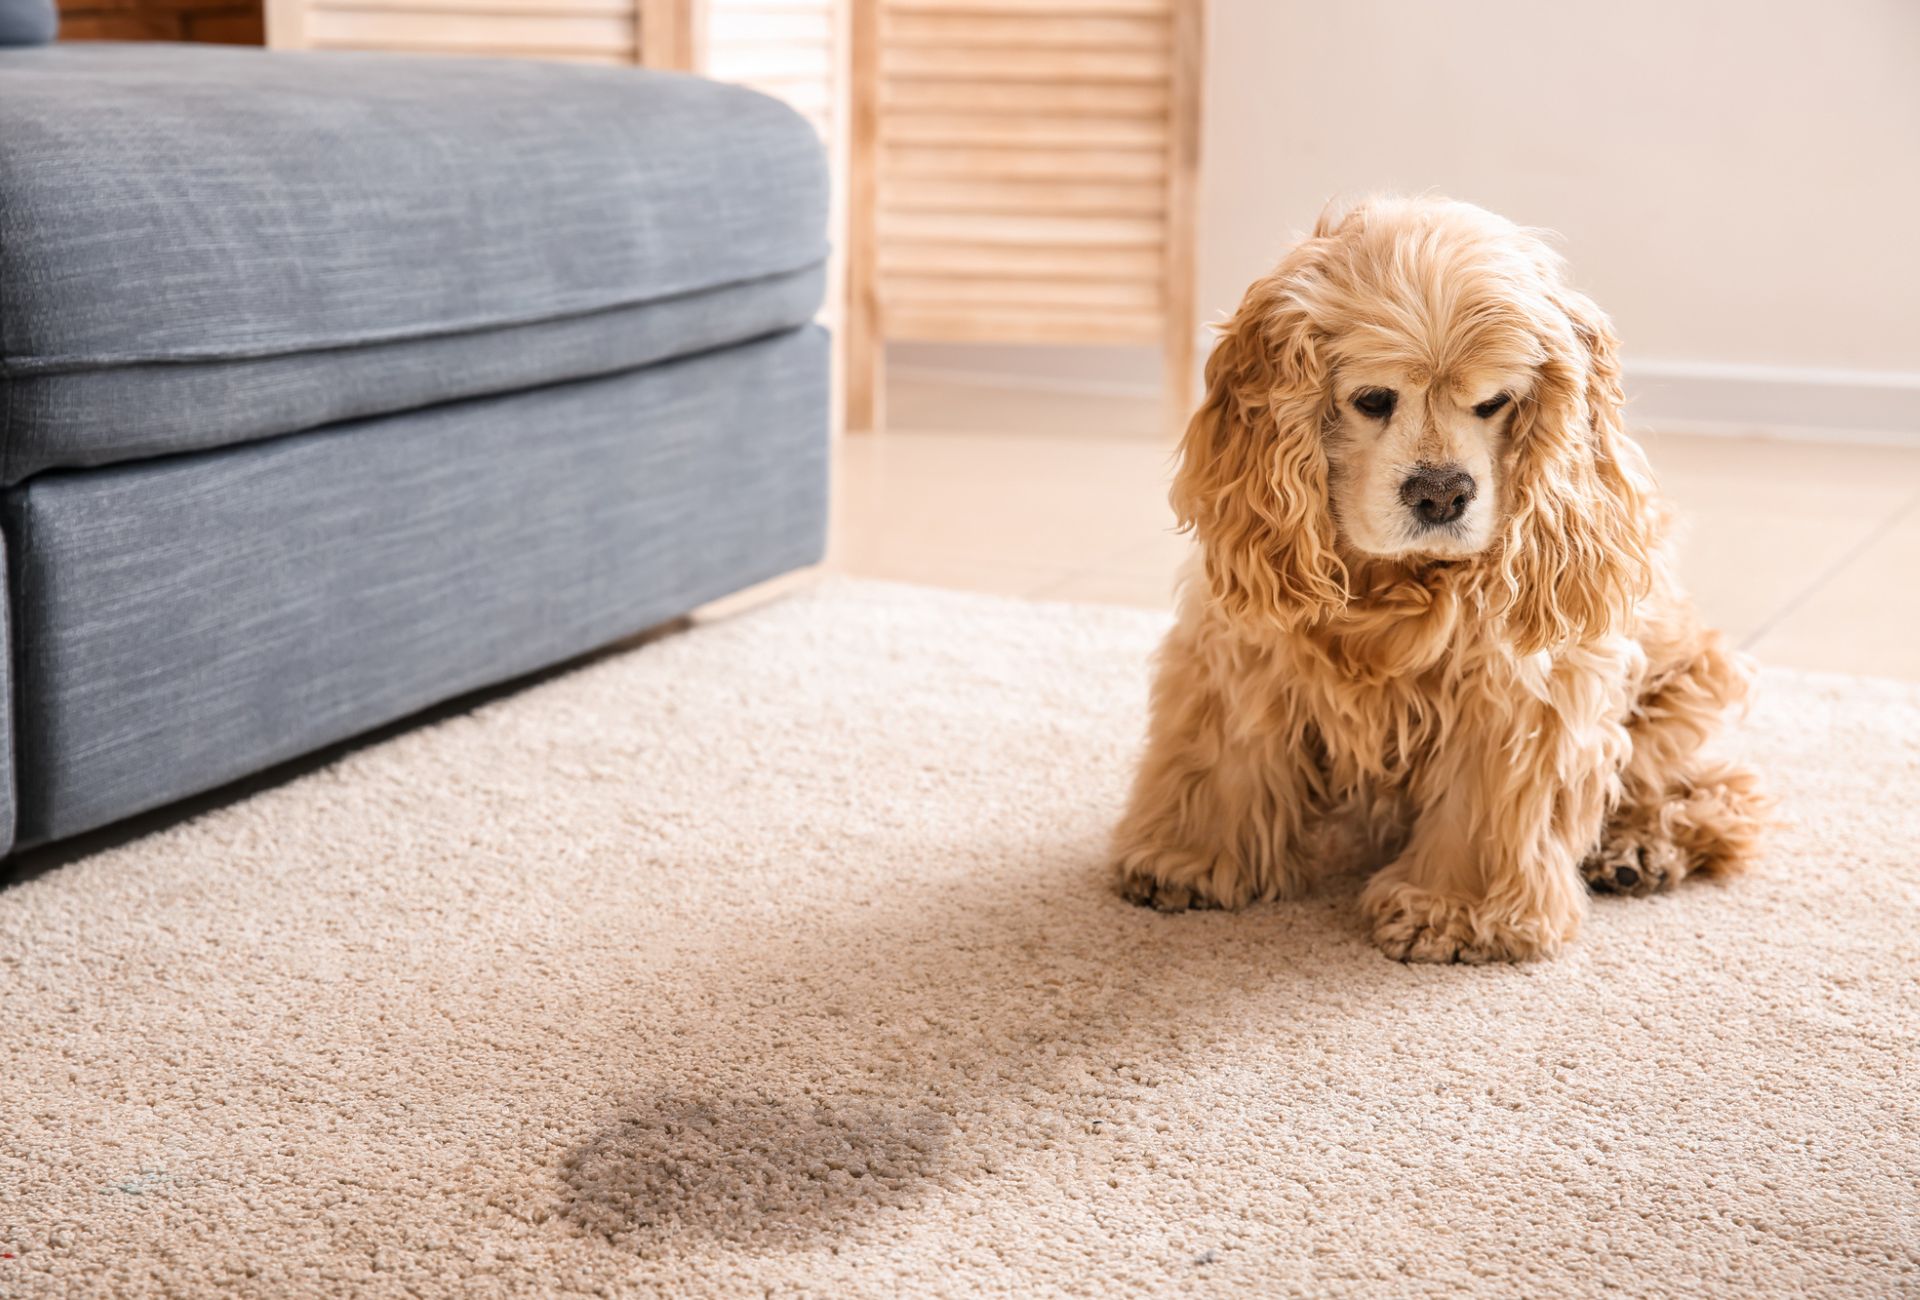 Small dog near wet spot on the carpet.